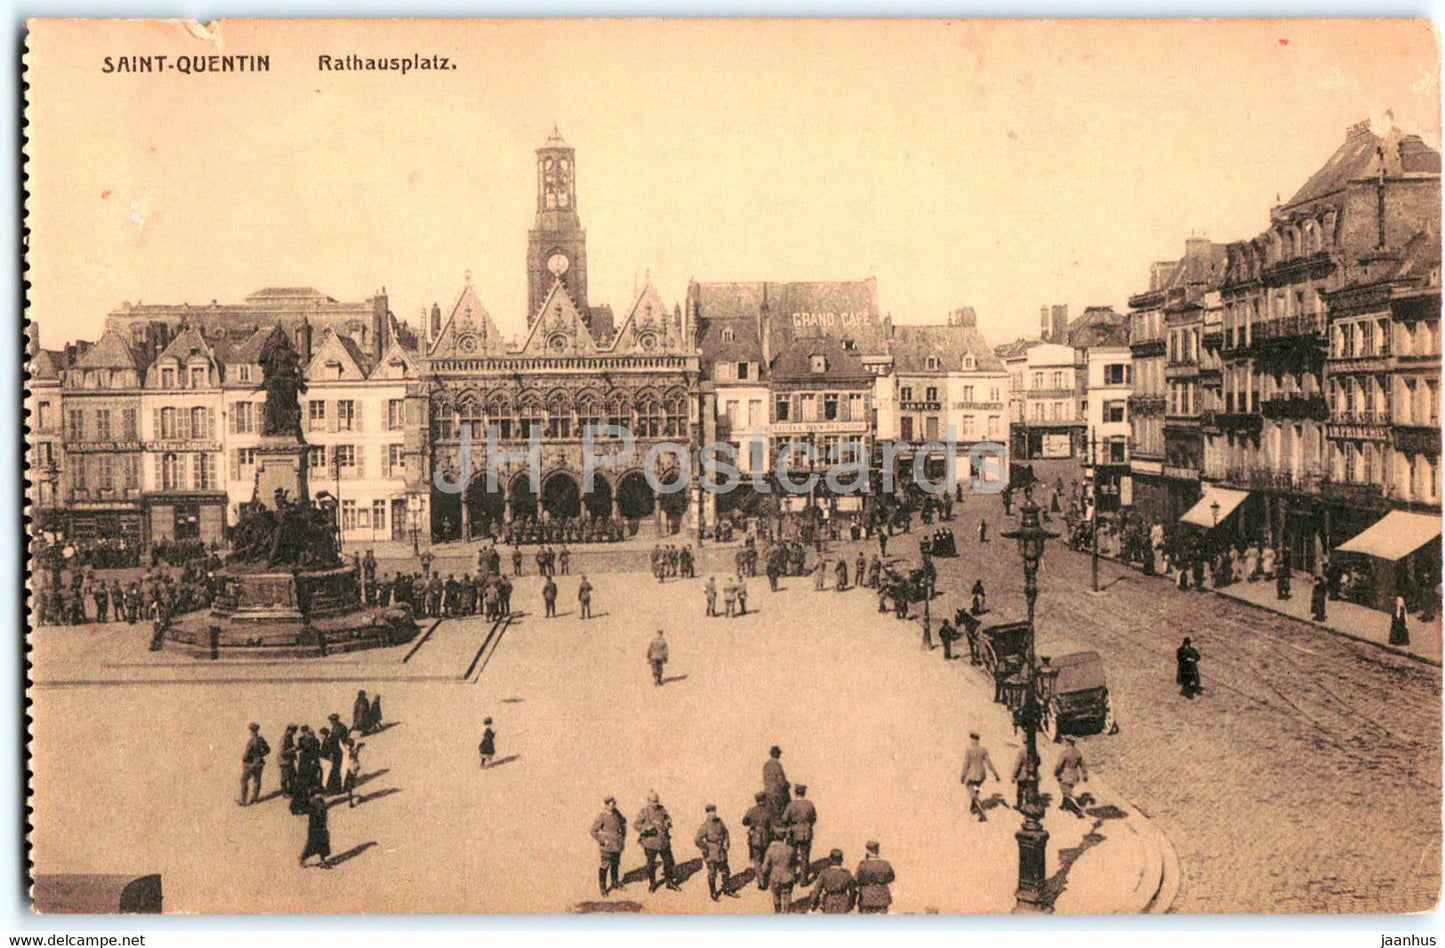 Saint Quentin - Rathausplatz - military - old postcard - France - unused - JH Postcards